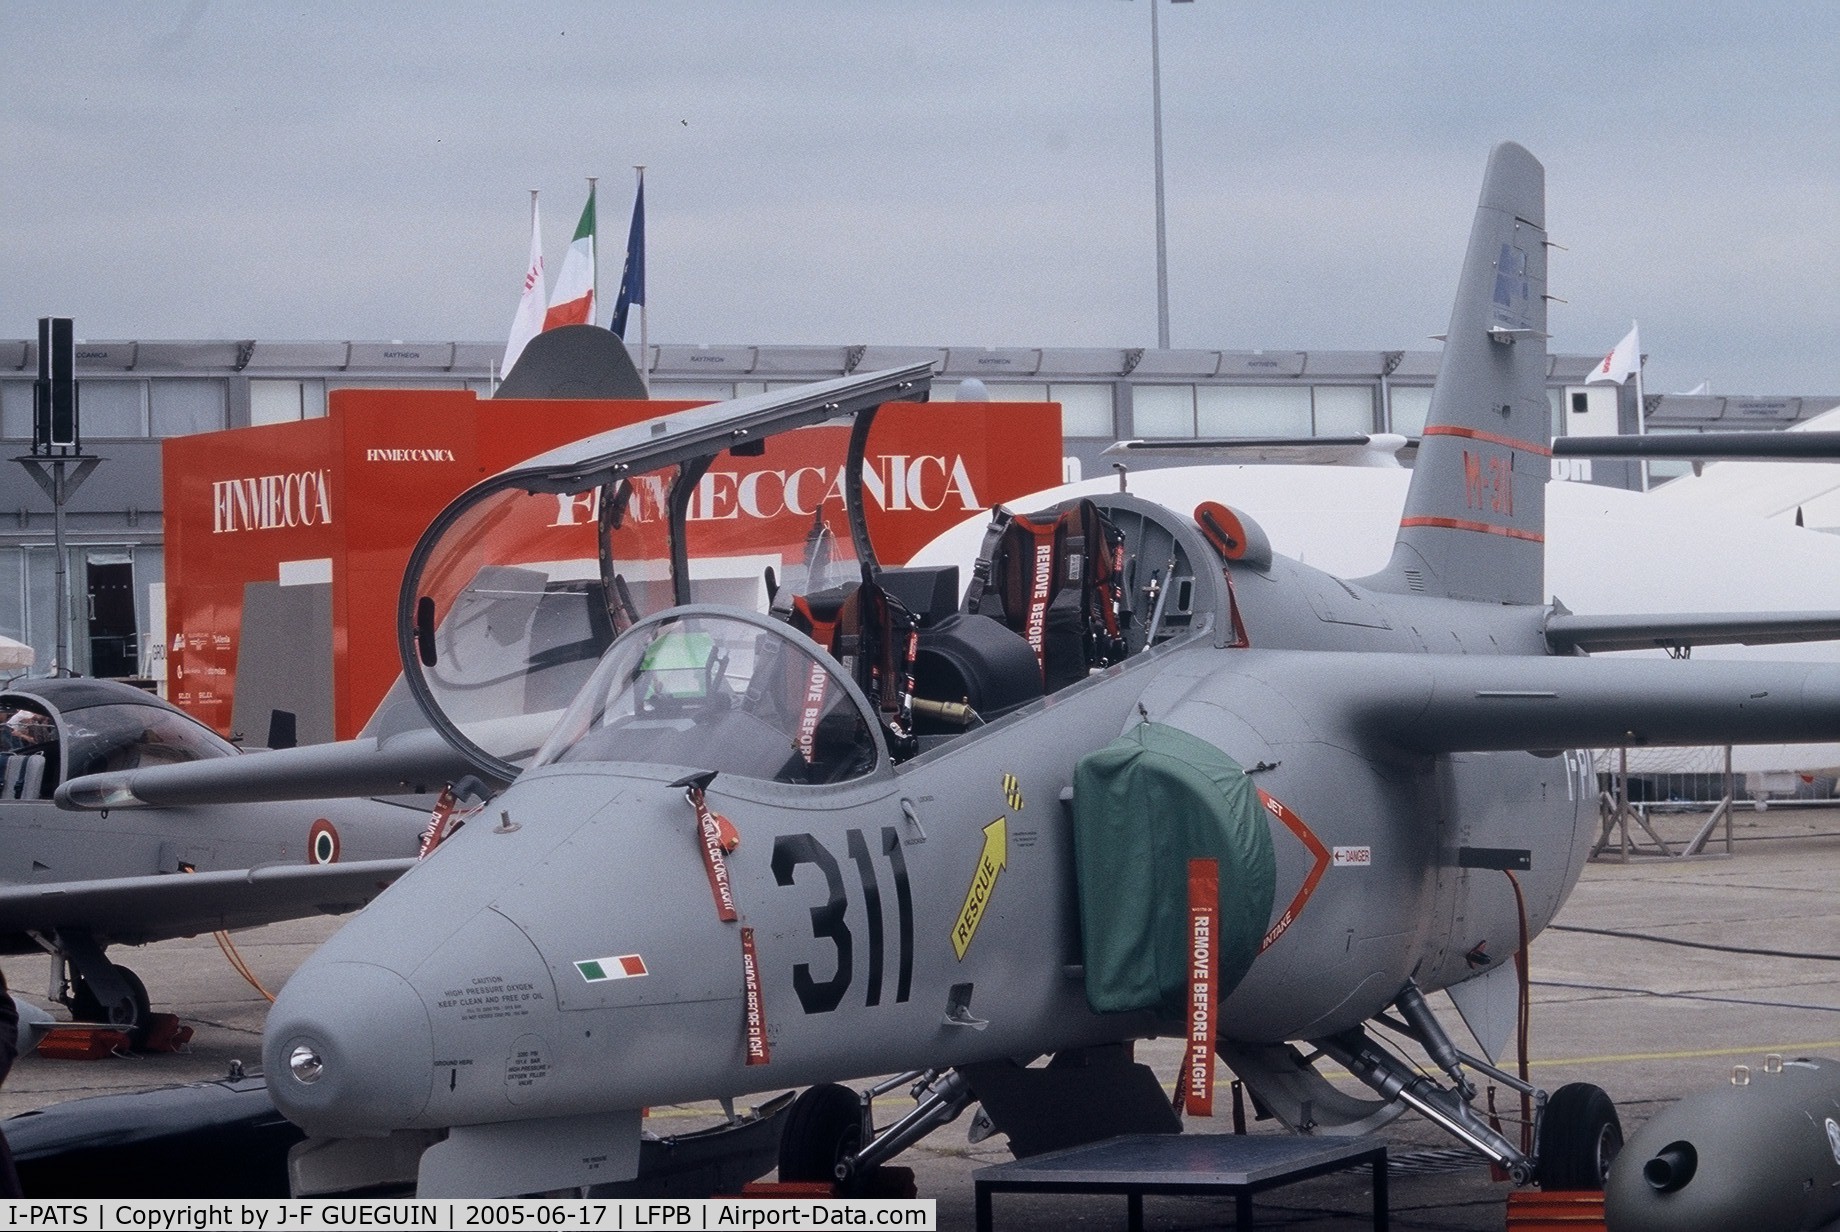 I-PATS, Aermacchi M-311 C/N 201, On display at Paris-Le Bourget 2005 airshow.